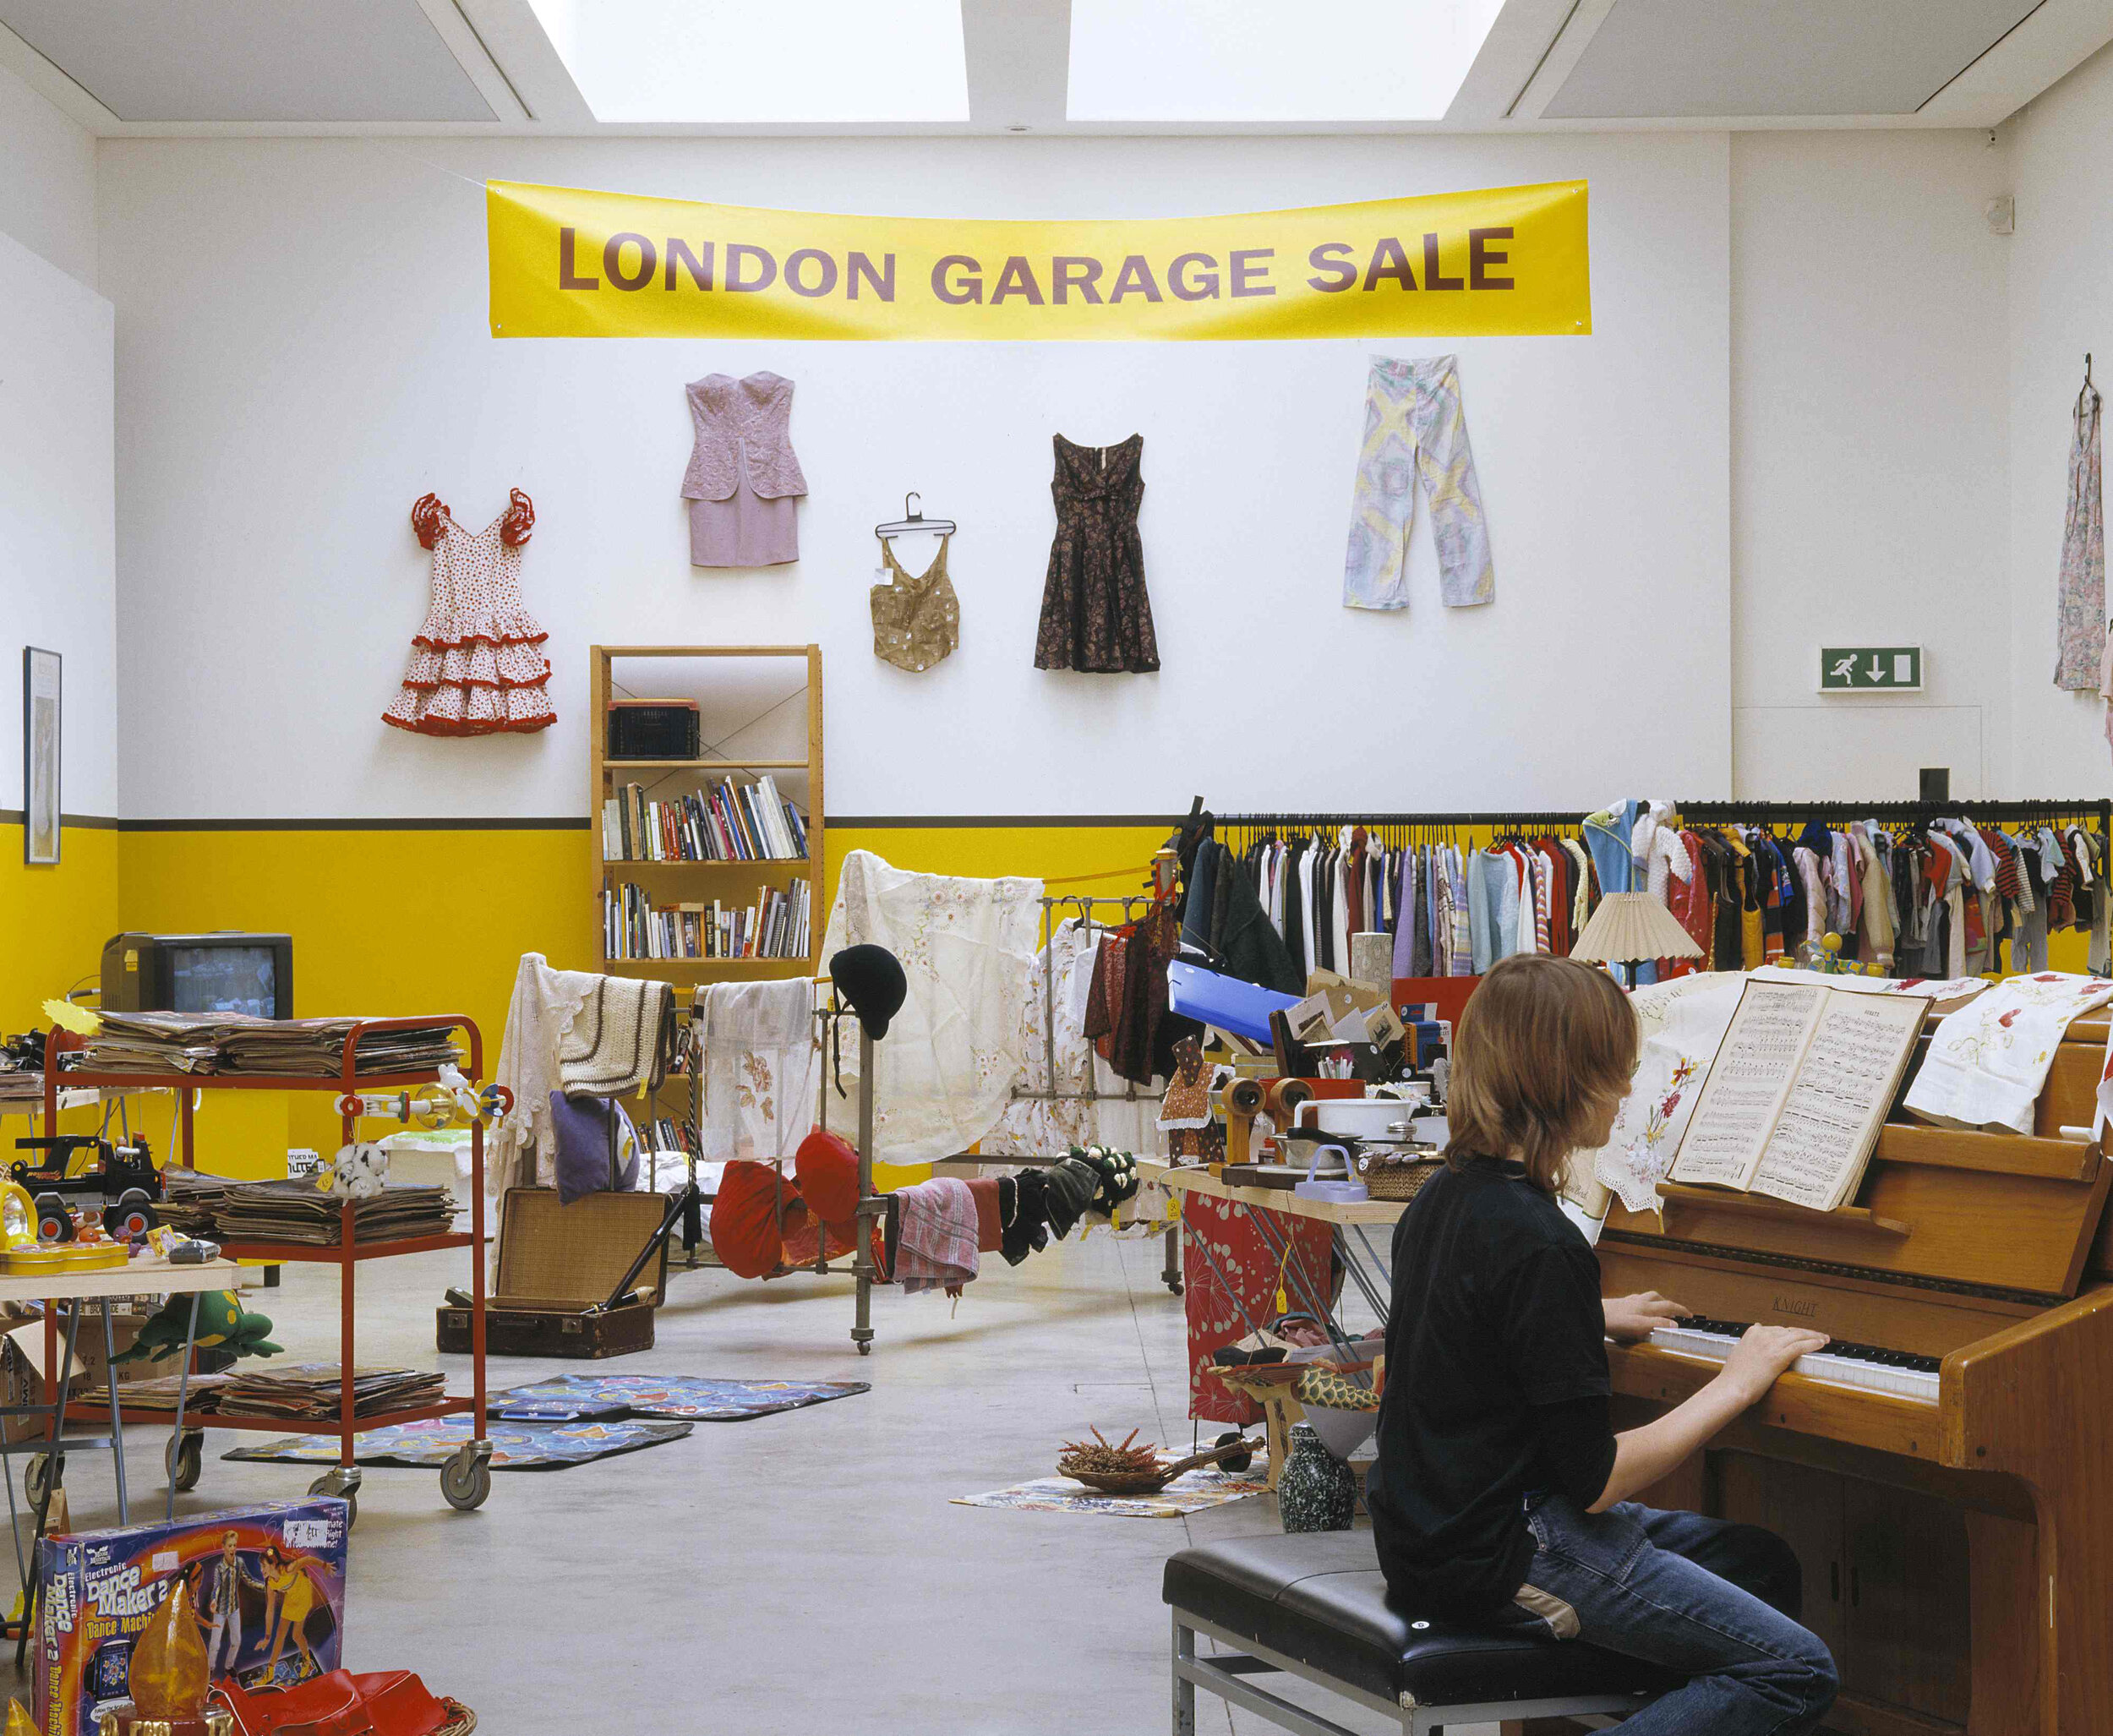  Garage Sale. Institute of Contemporary Arts, London, 2006 